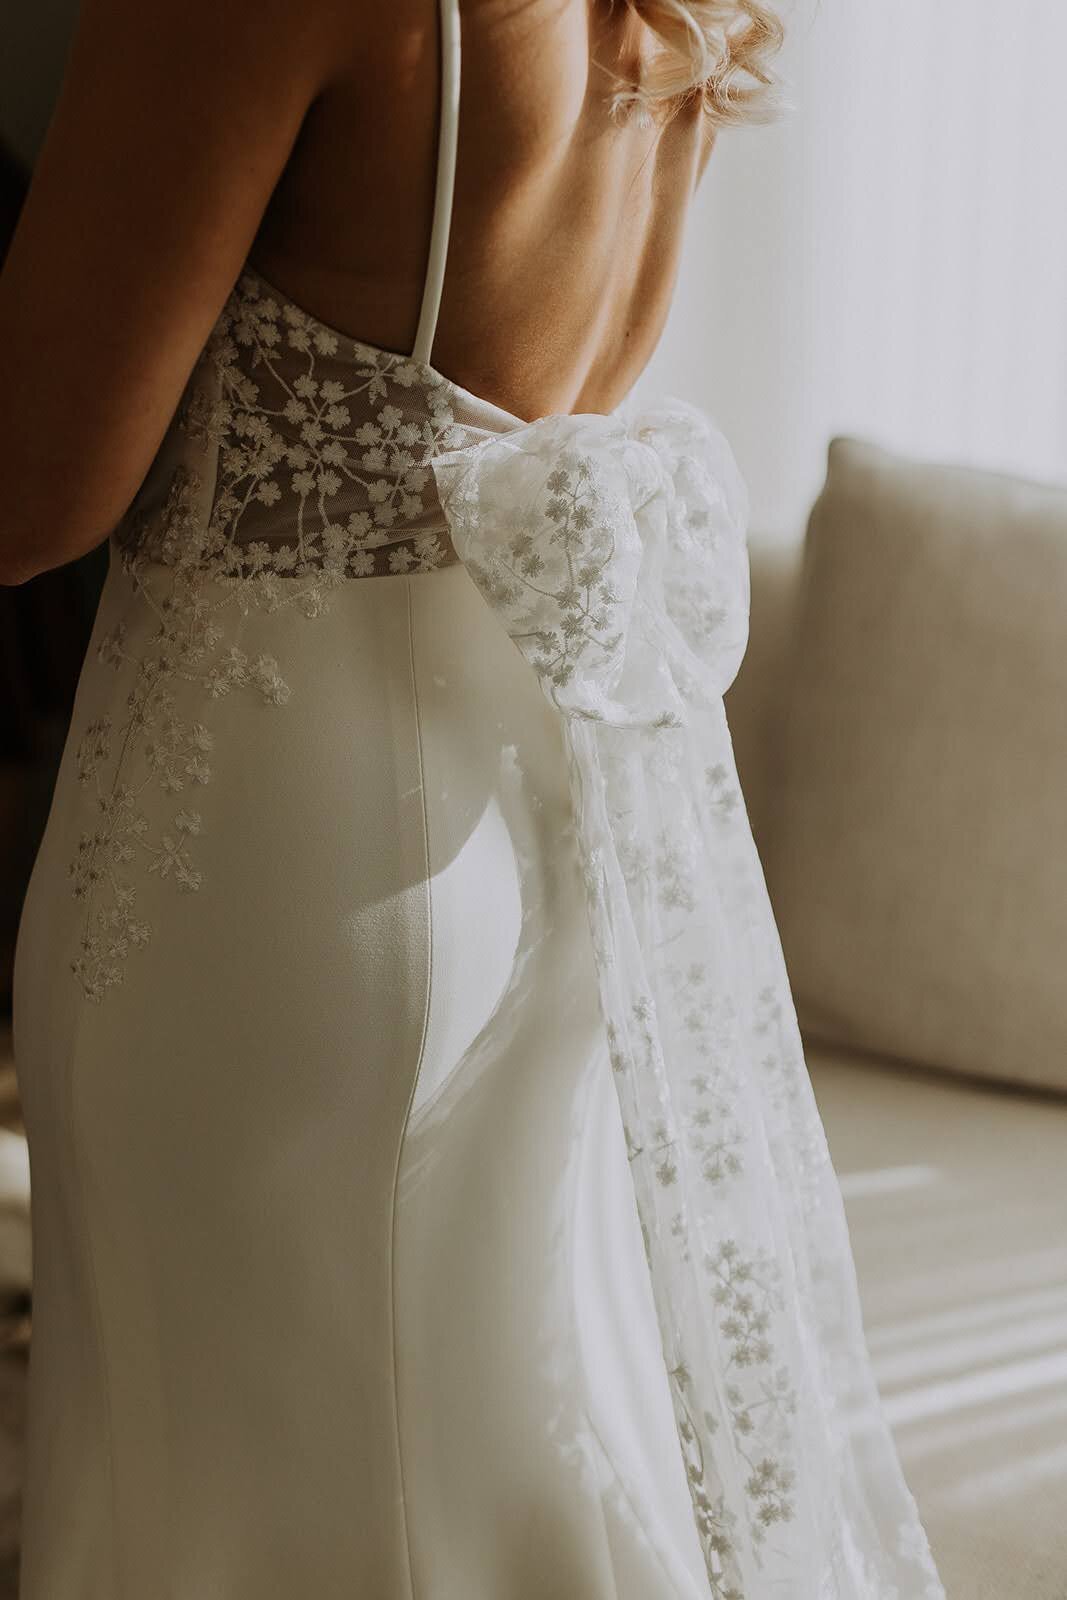 Lace-Wedding-Gown-Details